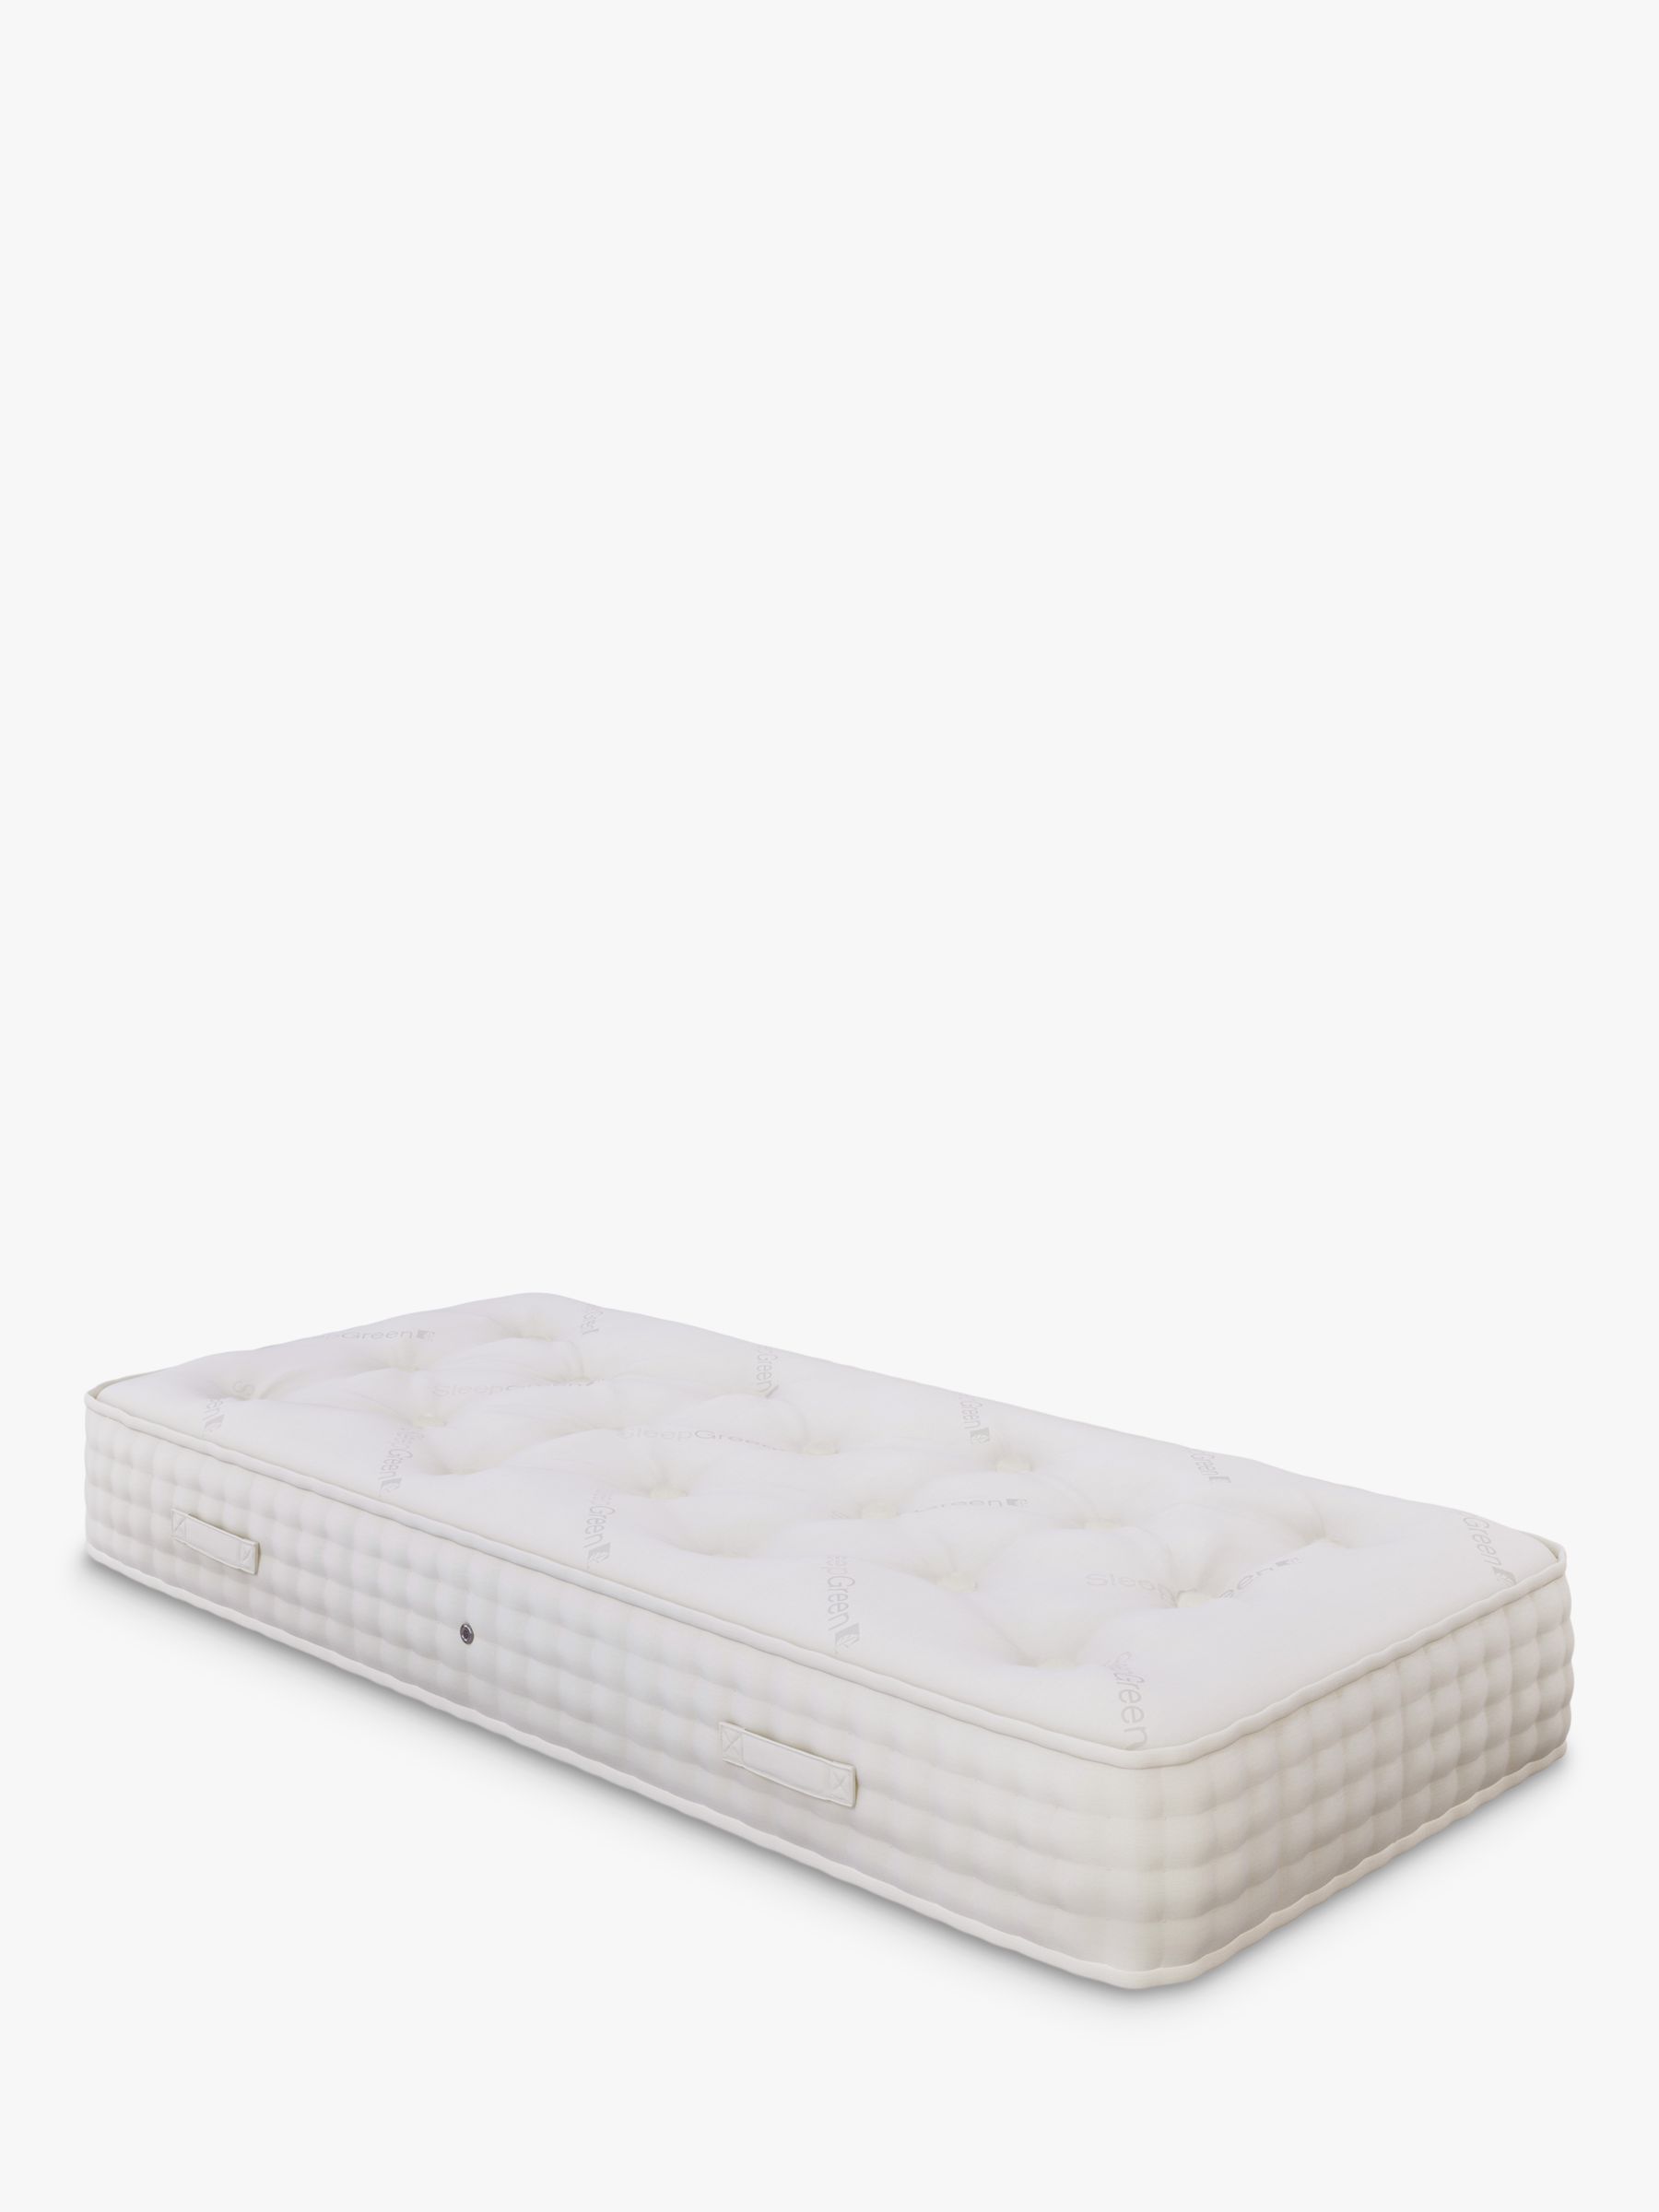 Photo of Sleepgreen vegan natural latex pocket spring mattress medium tension single